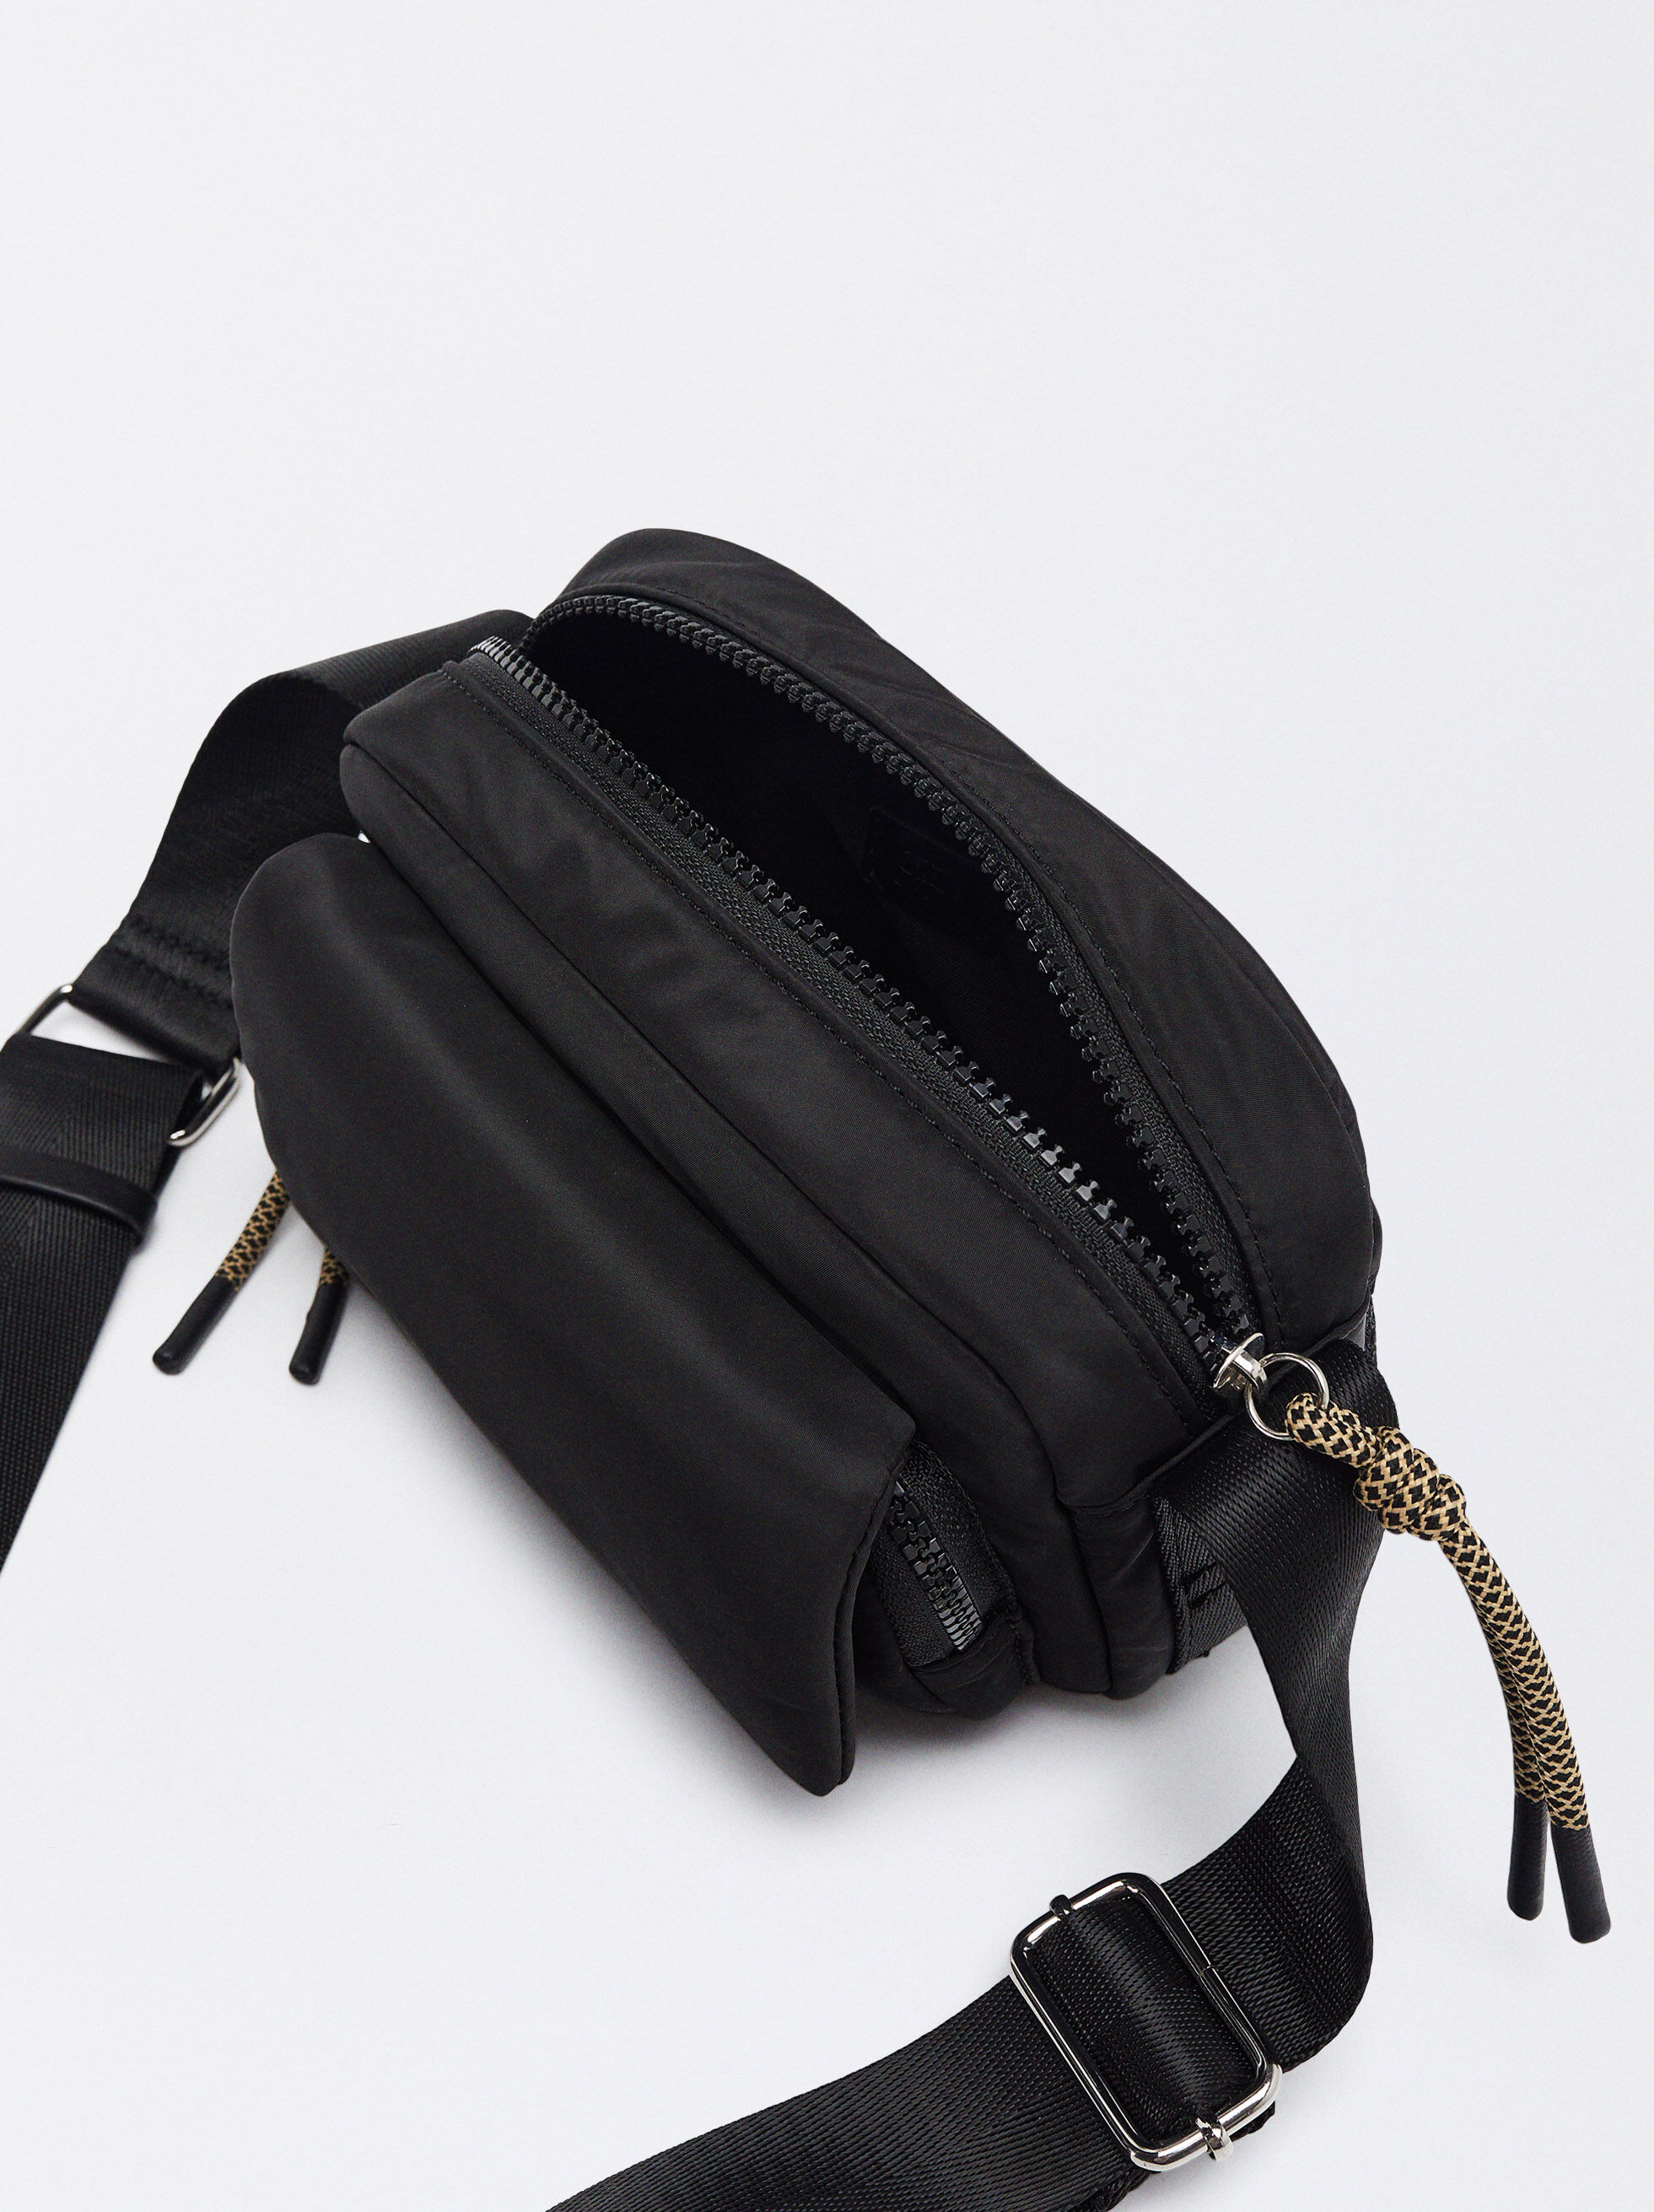 Jones New York Signature Navy Nylon Foldover Crossbody Purse Bag Handbag  Sporty | eBay